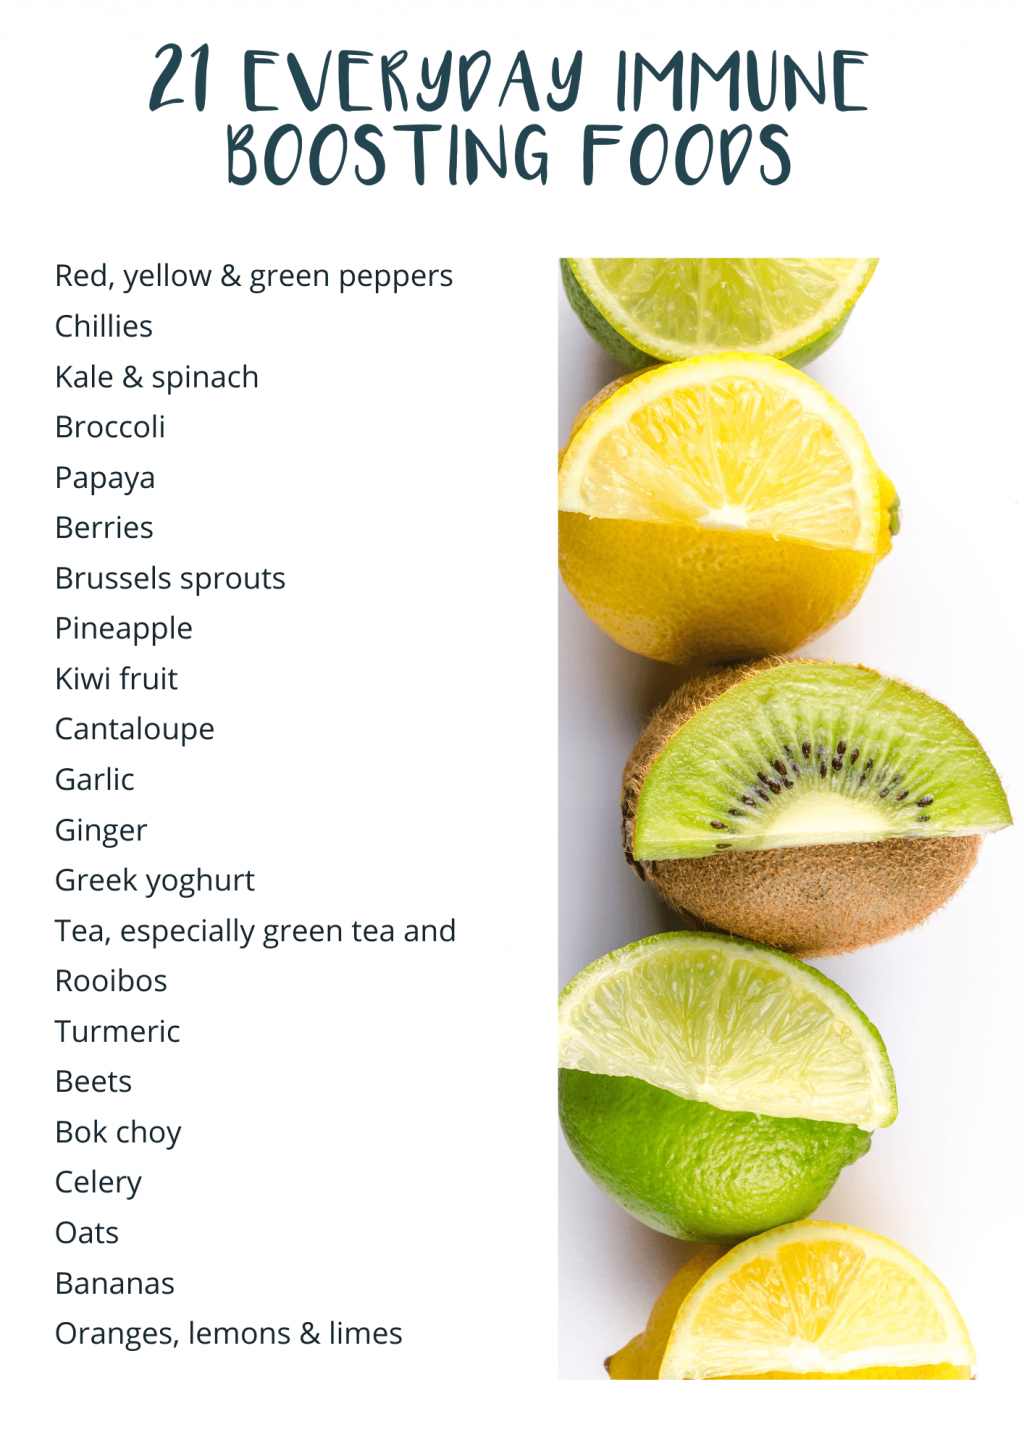 List of 21 everyday immune boosting foods